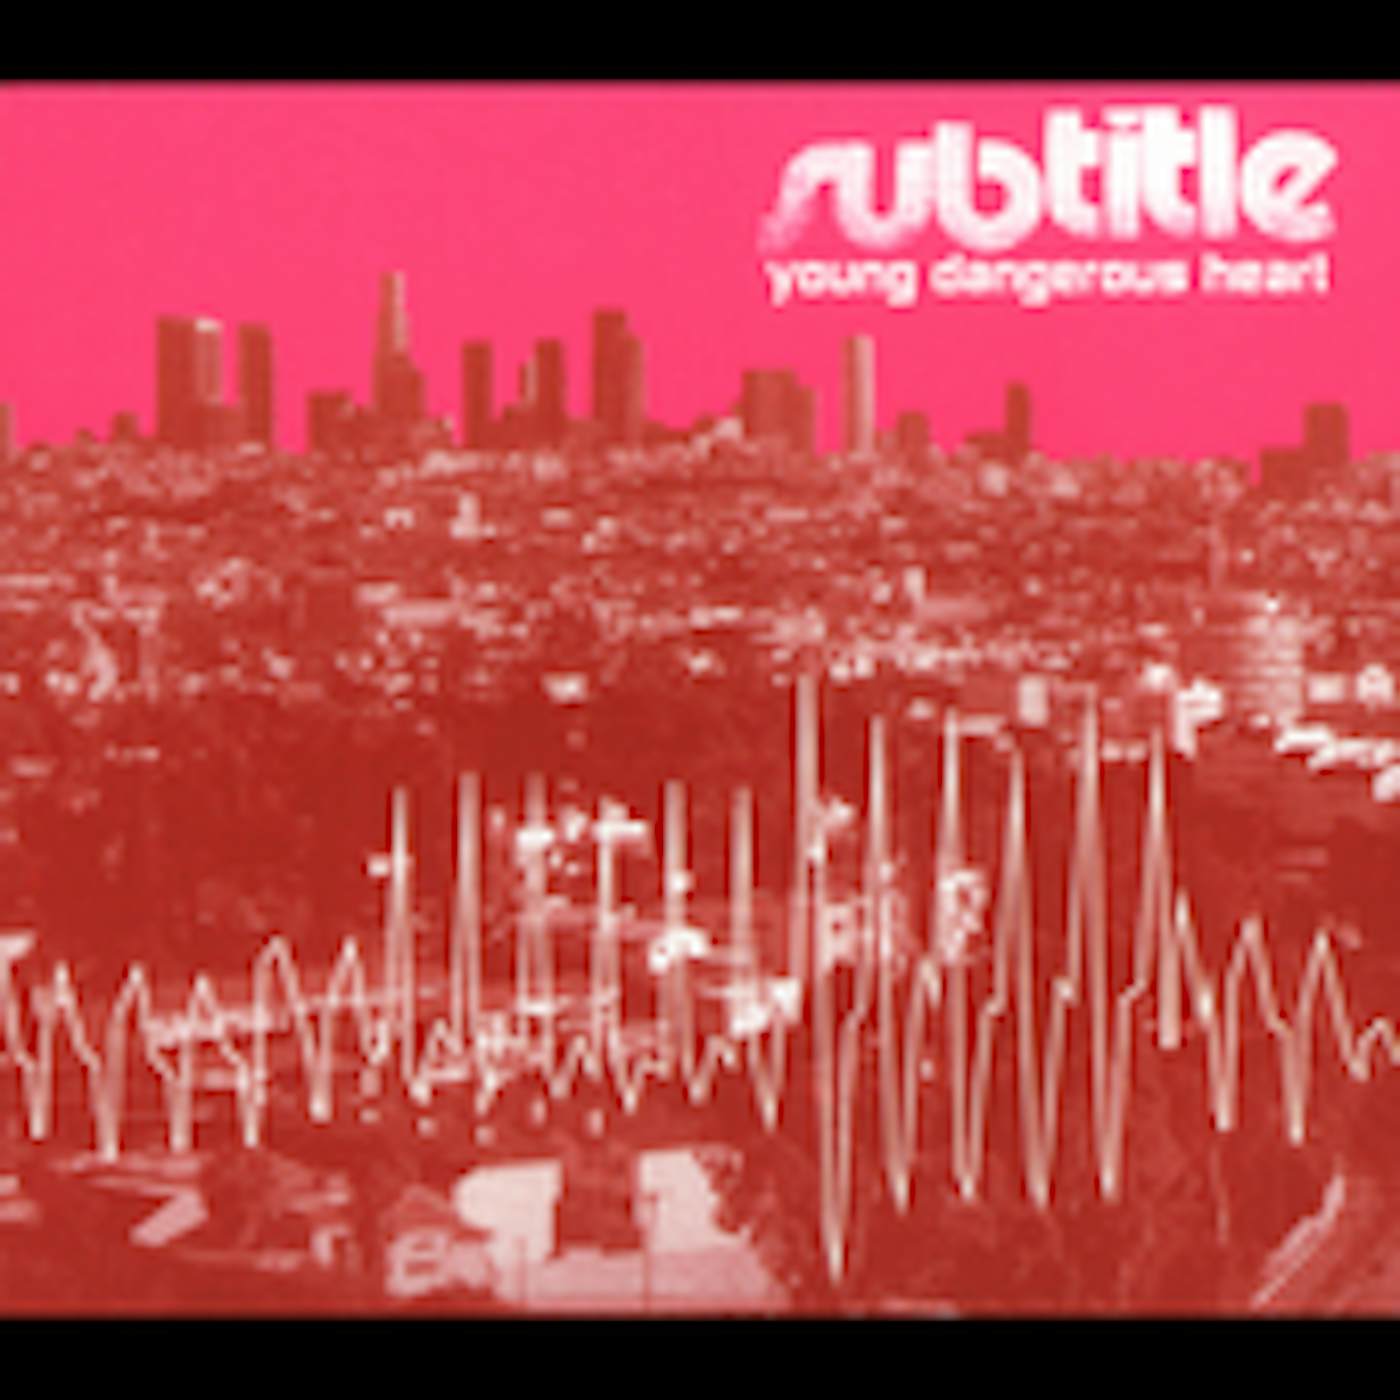 Subtitle YOUNG DANGEROUS HEART CD